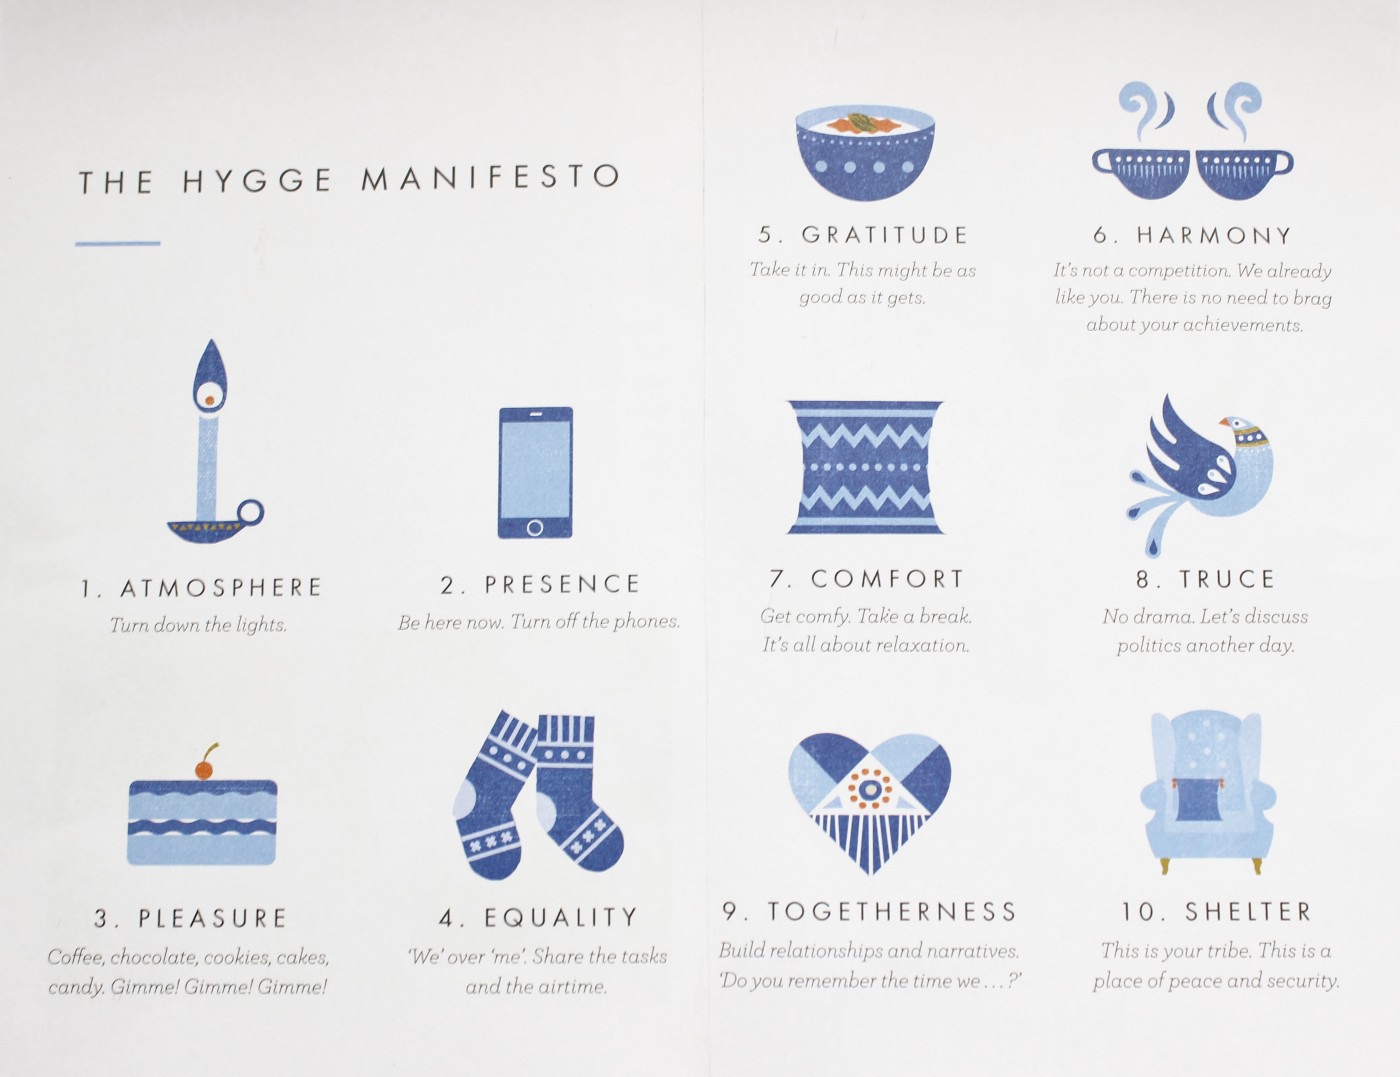 The Hygge Manifesto by Meik Wiking